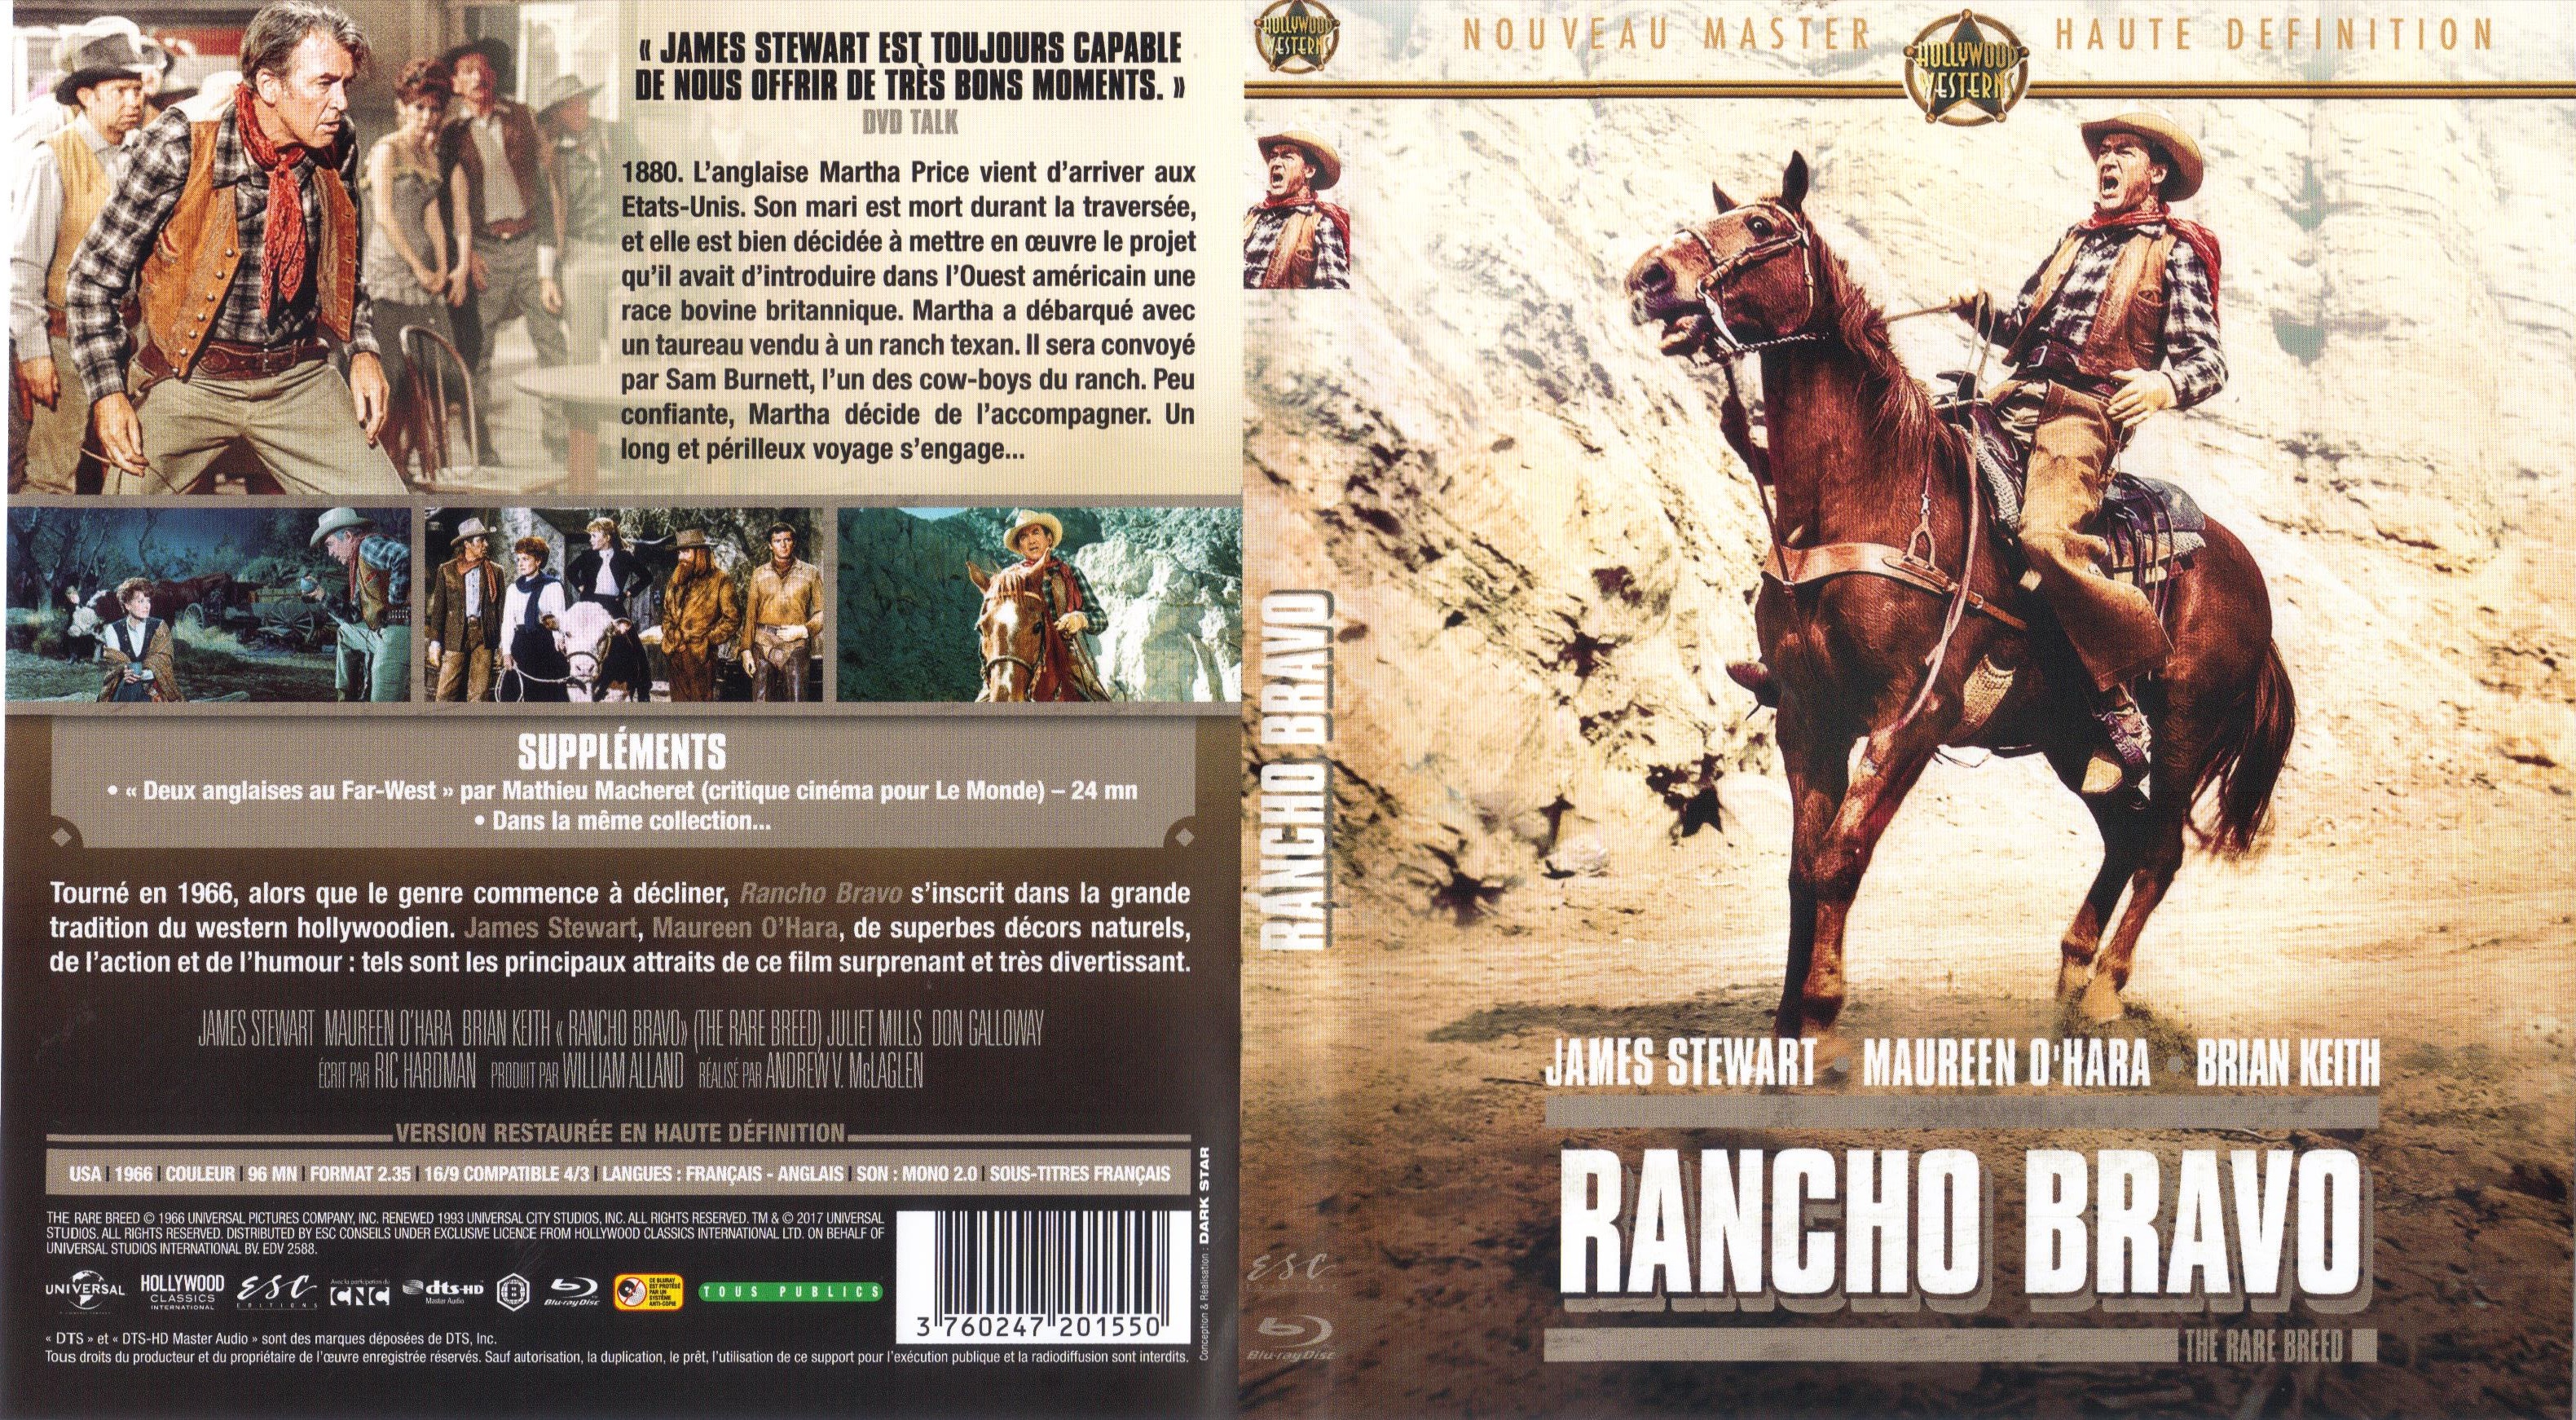 Jaquette DVD Rancho Bravo (BLU-RAY)